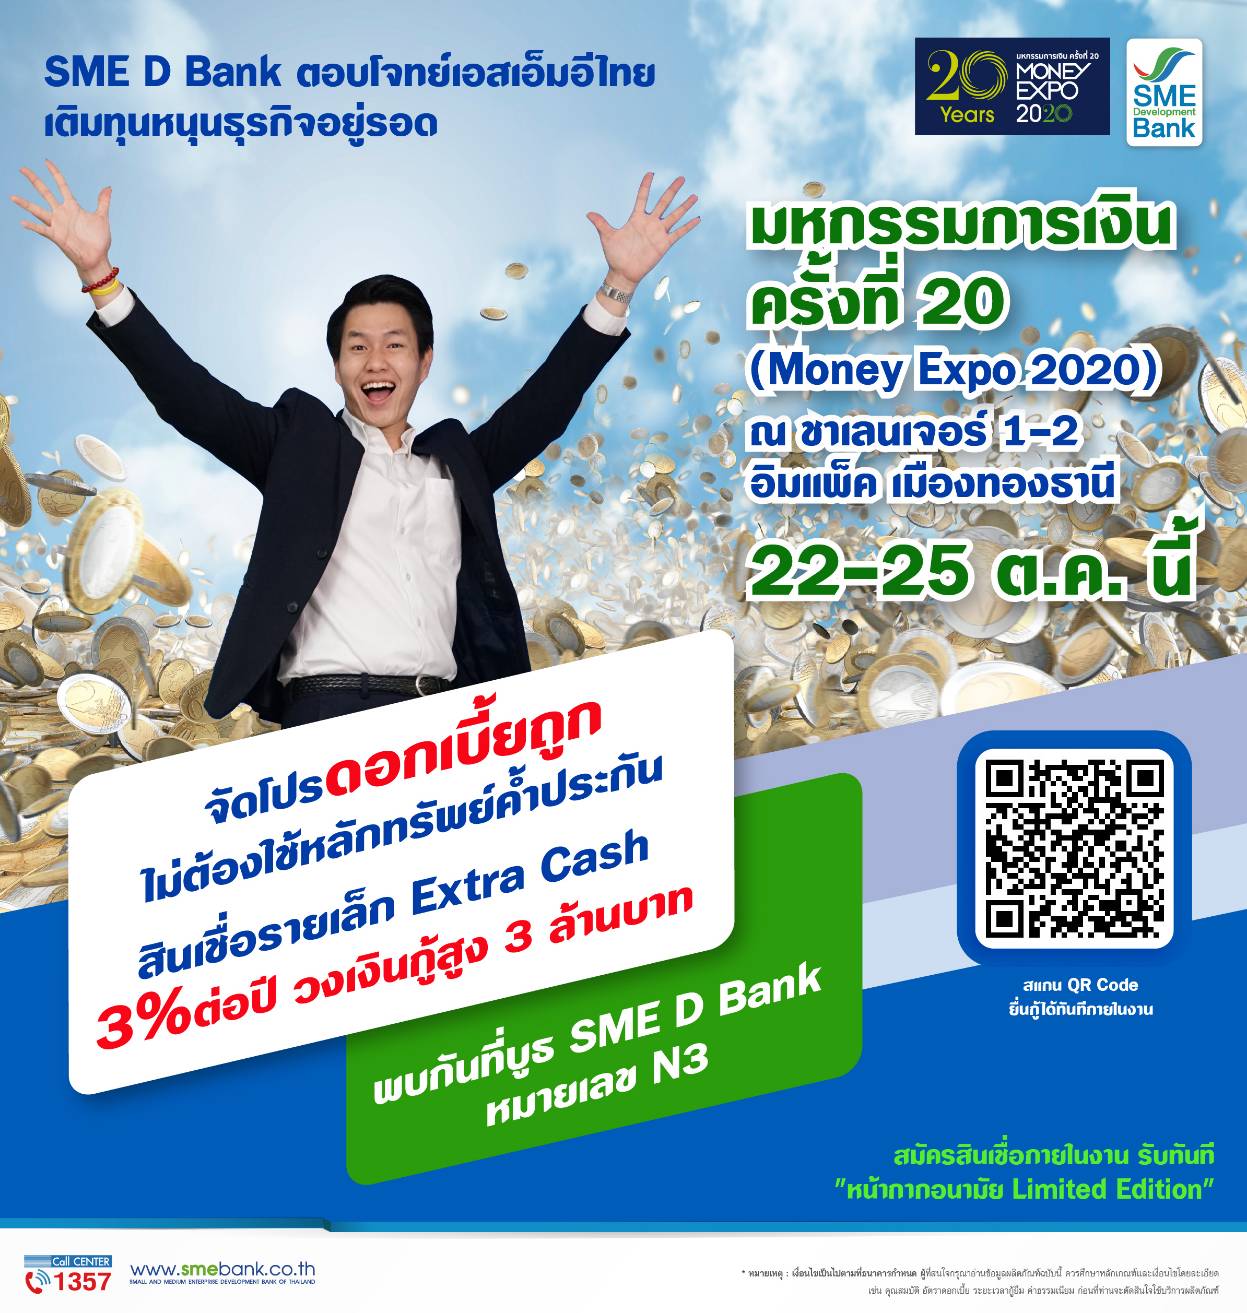 SME D Bank จัดโปรเด็ดเพื่อเอสเอ็มอีไทยในงาน 'Money Expo 2020 สินเชื่อดอกเบี้ยถูก 3%ต่อปี ผ่อนนาน ไม่ต้องมีหลักทรัพย์ค้ำประกัน